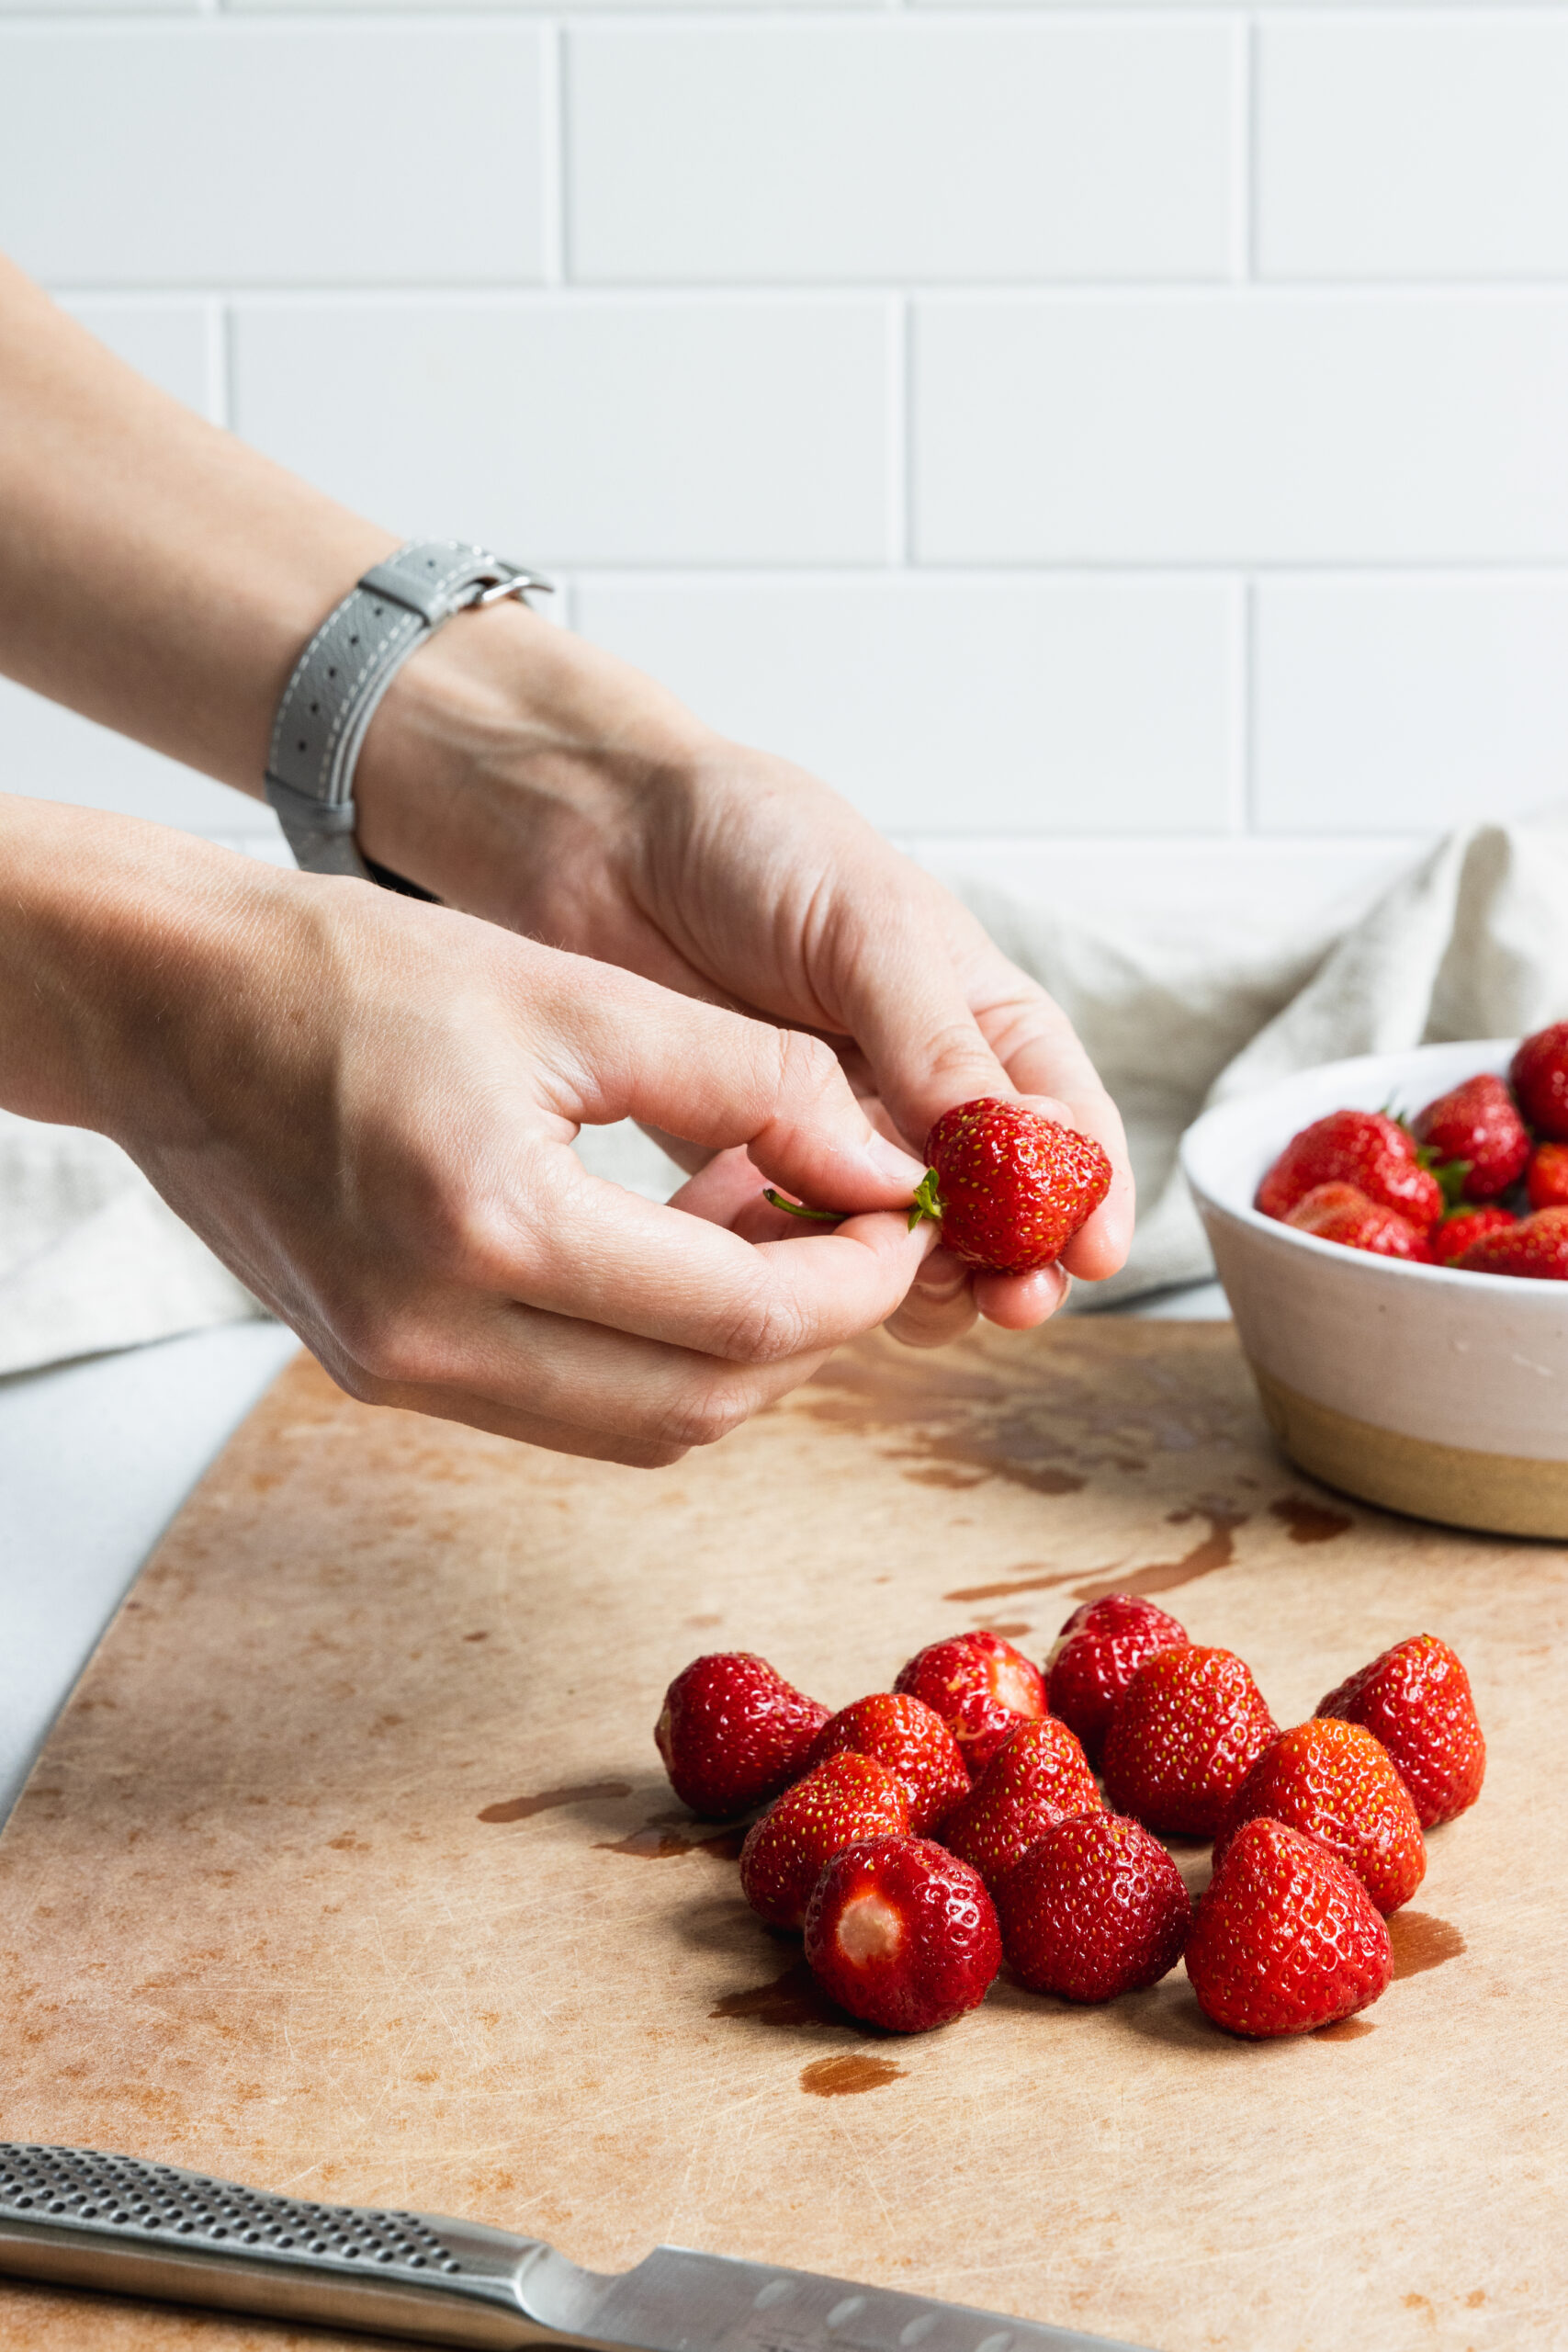 Preparing the fresh strawberries